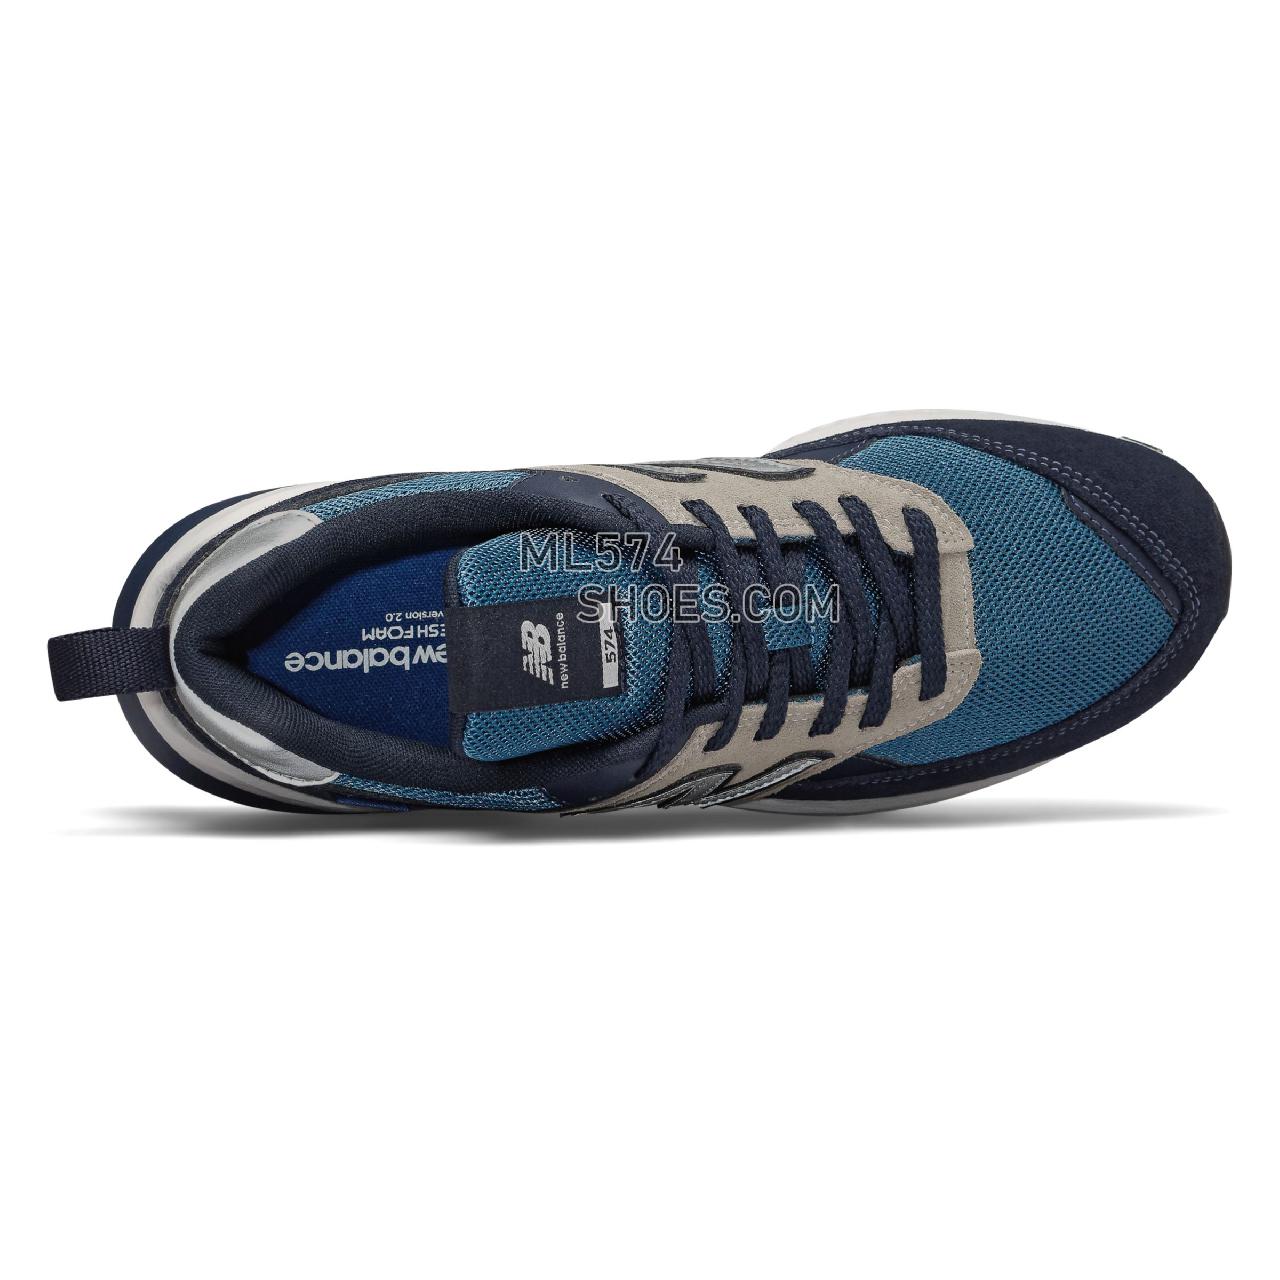 New Balance 574 Sport - Men's Sport Style Sneakers - Eclipse with Blue Rain - MS574ACJ